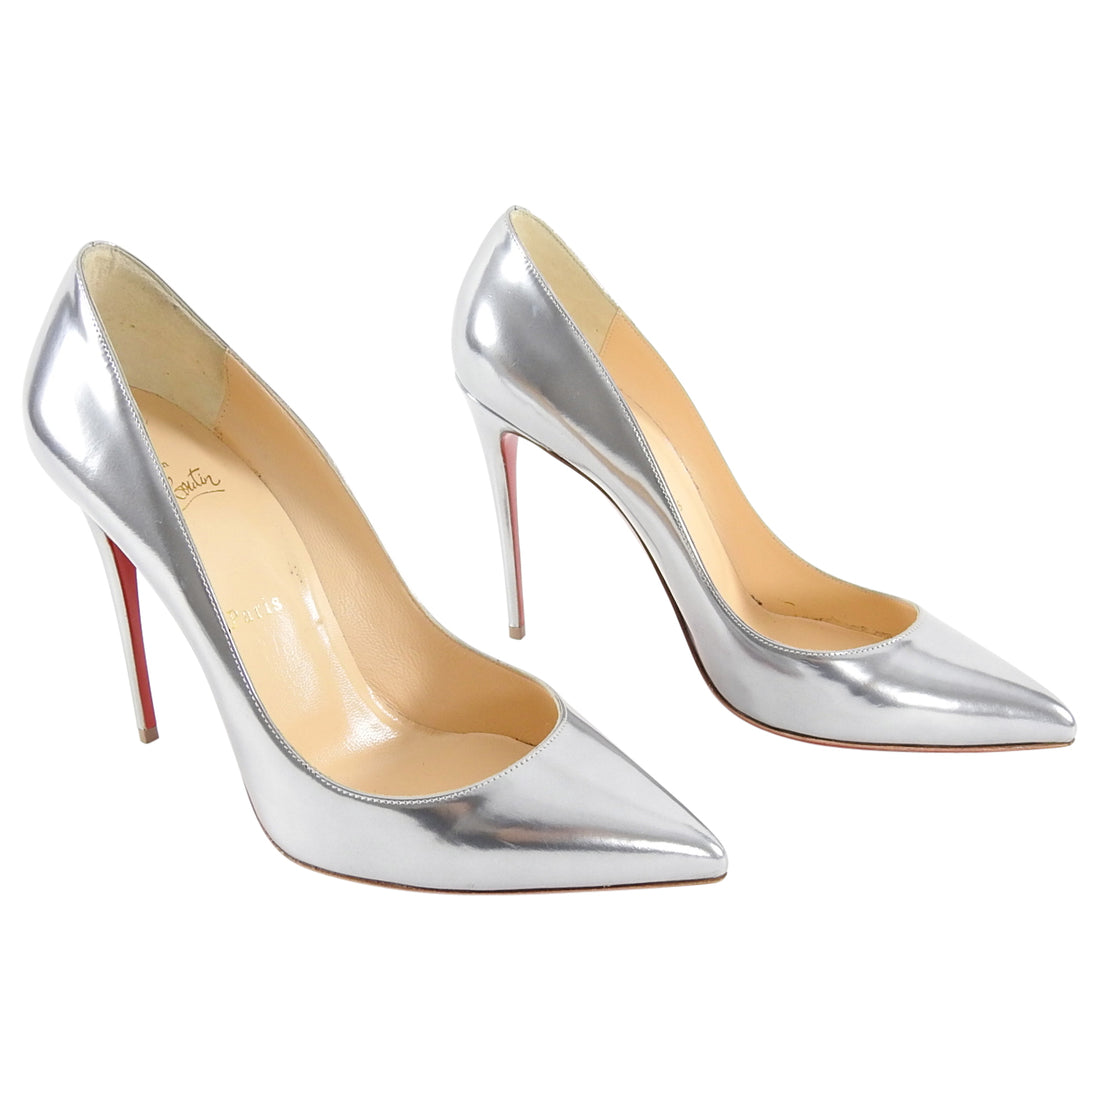 christian louboutin heels silver